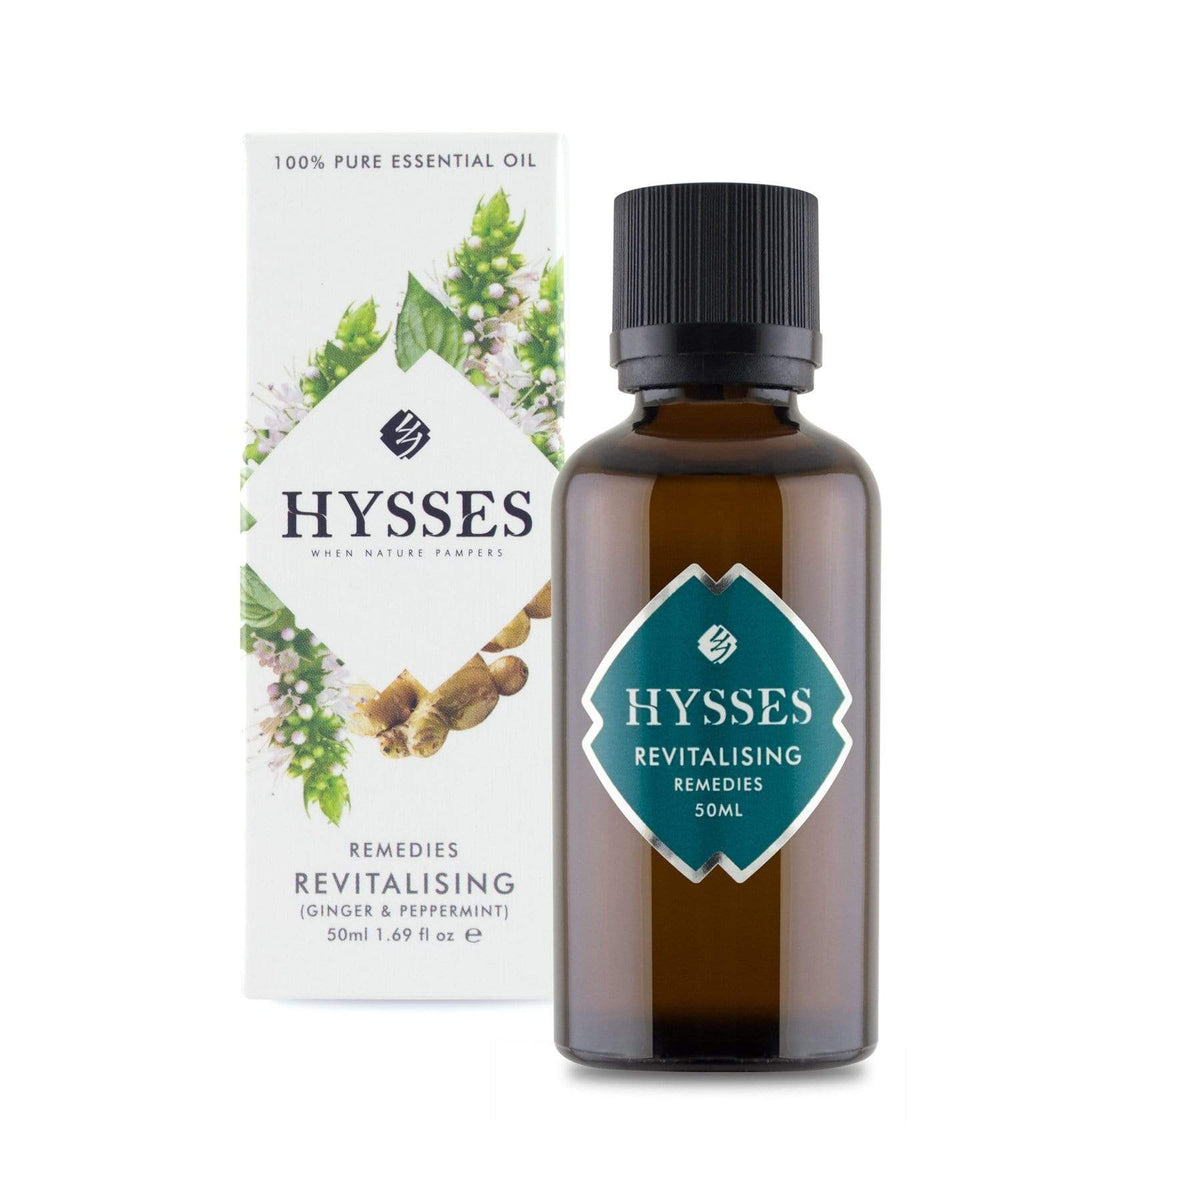 Hysses Essential Oil 50ml Remedies, Revitalising